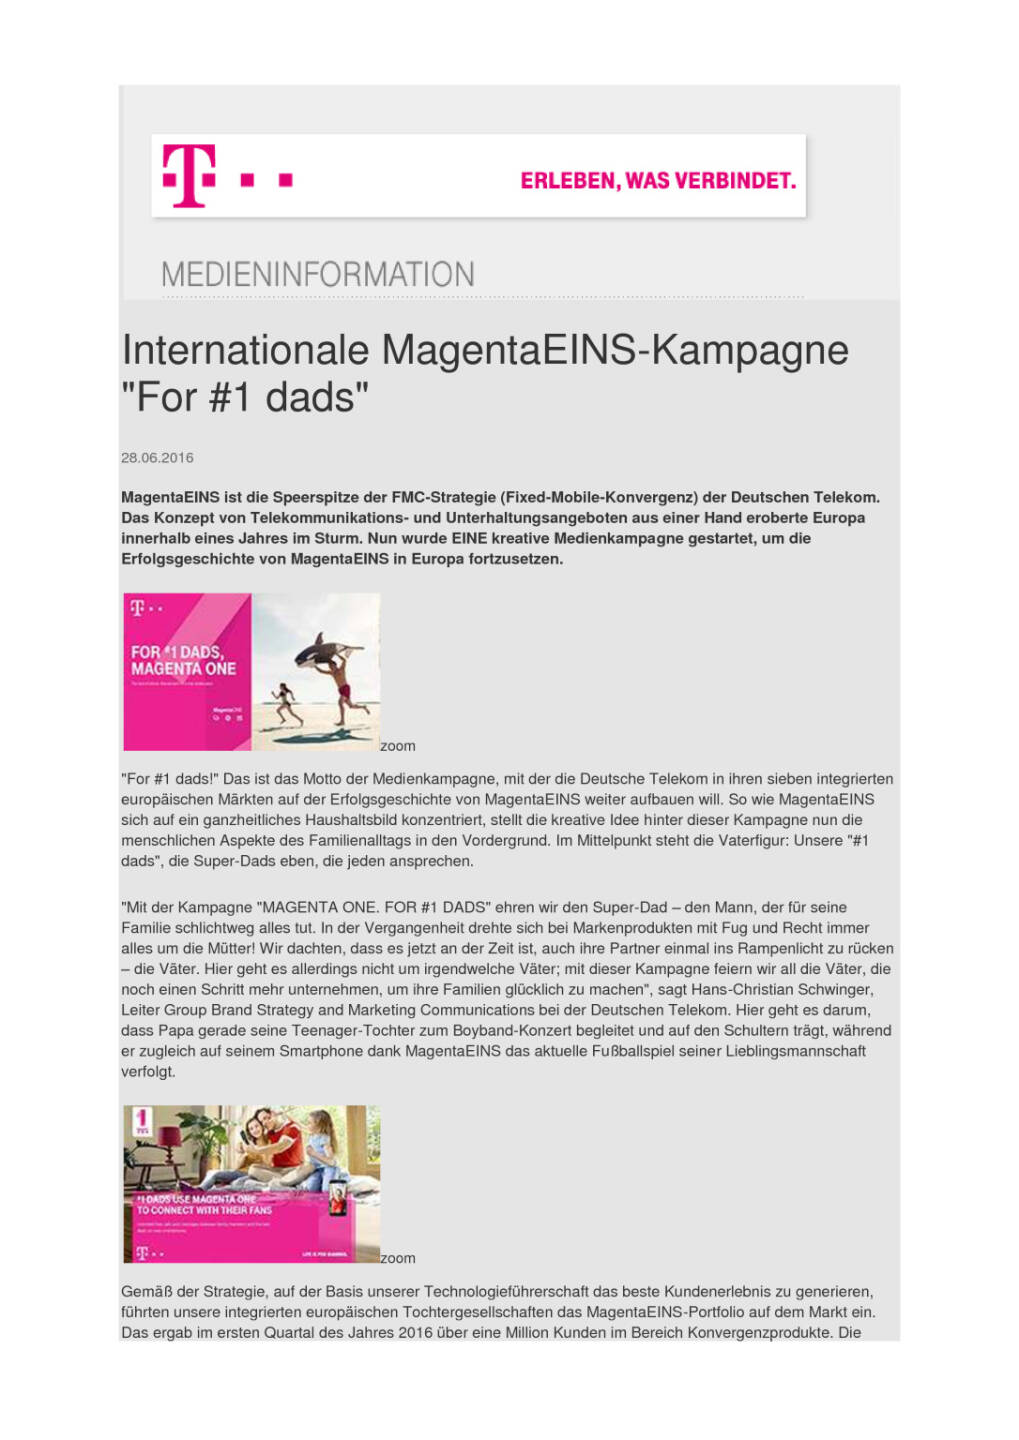 Deutsche Telekom: Internationale MagentaEINS-Kampagne For #1 dads, Seite 1/2, komplettes Dokument unter http://boerse-social.com/static/uploads/file_1286_deutsche_telekom_internationale_magentaeins-kampagne_for_1_dads.pdf